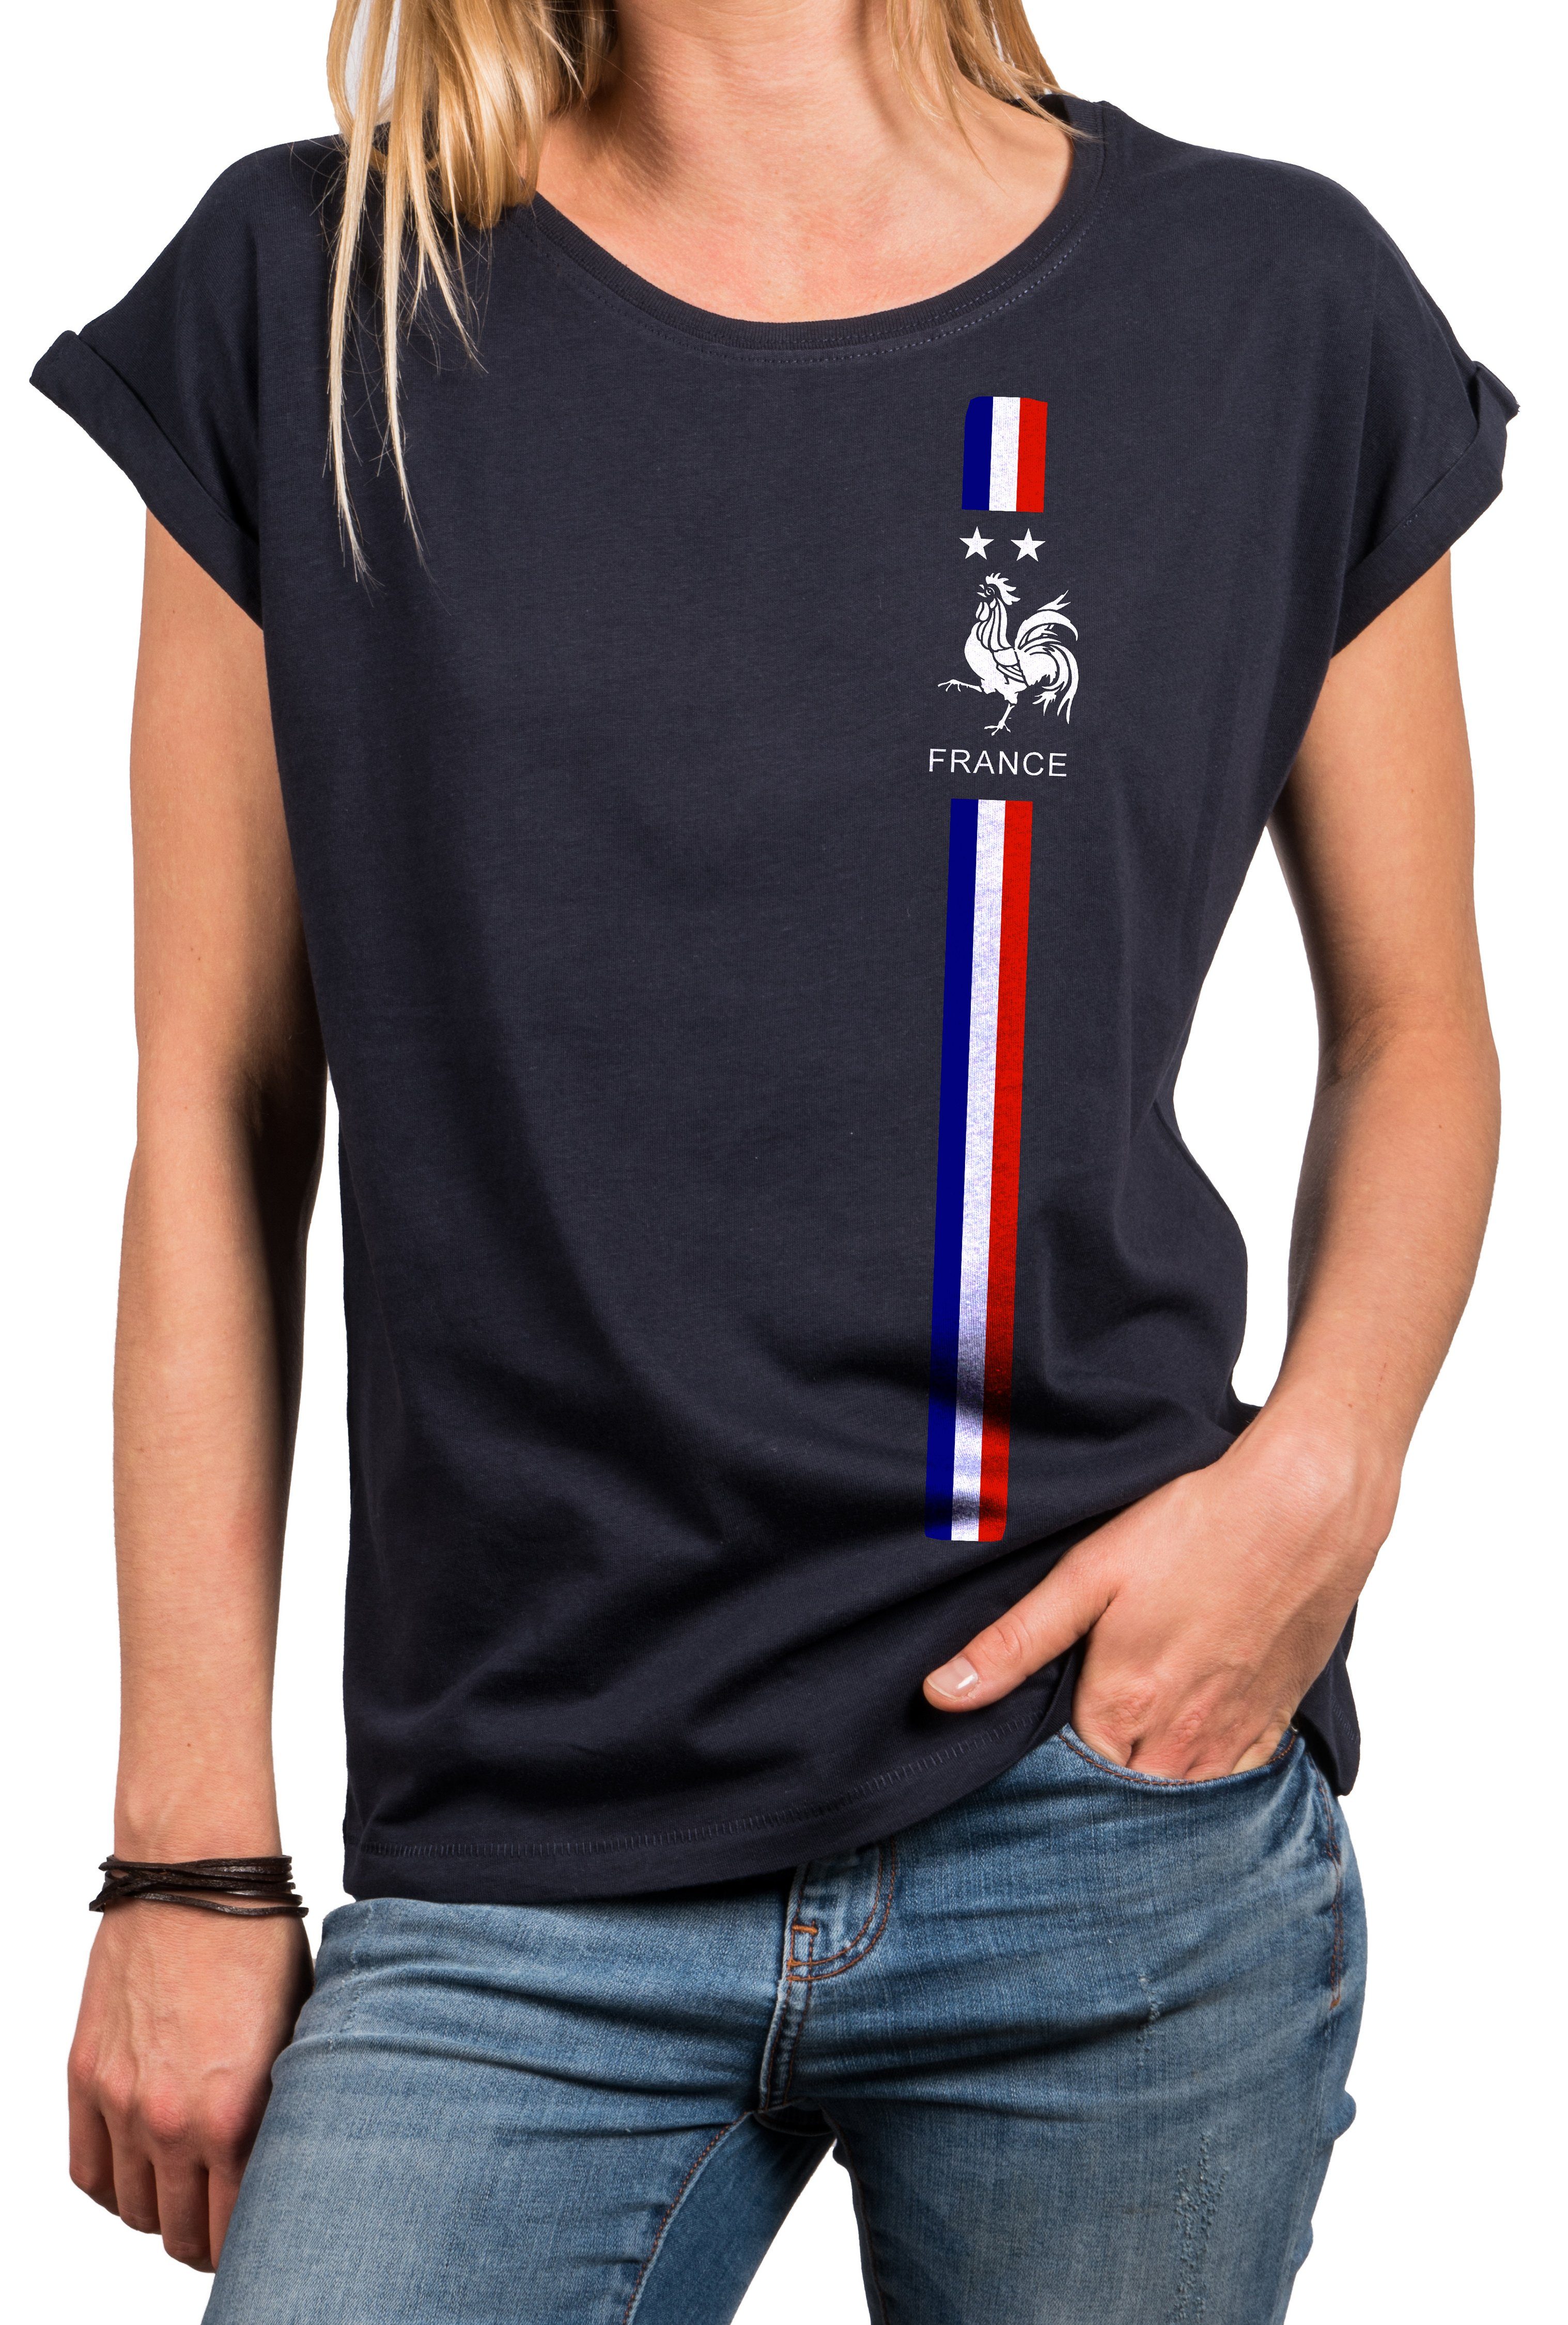 MAKAYA Print-Shirt Damen Kurzarmshirt Baumwolle Frankreich Fahne Flagge Trikot Top Tunika, große Größen Blau